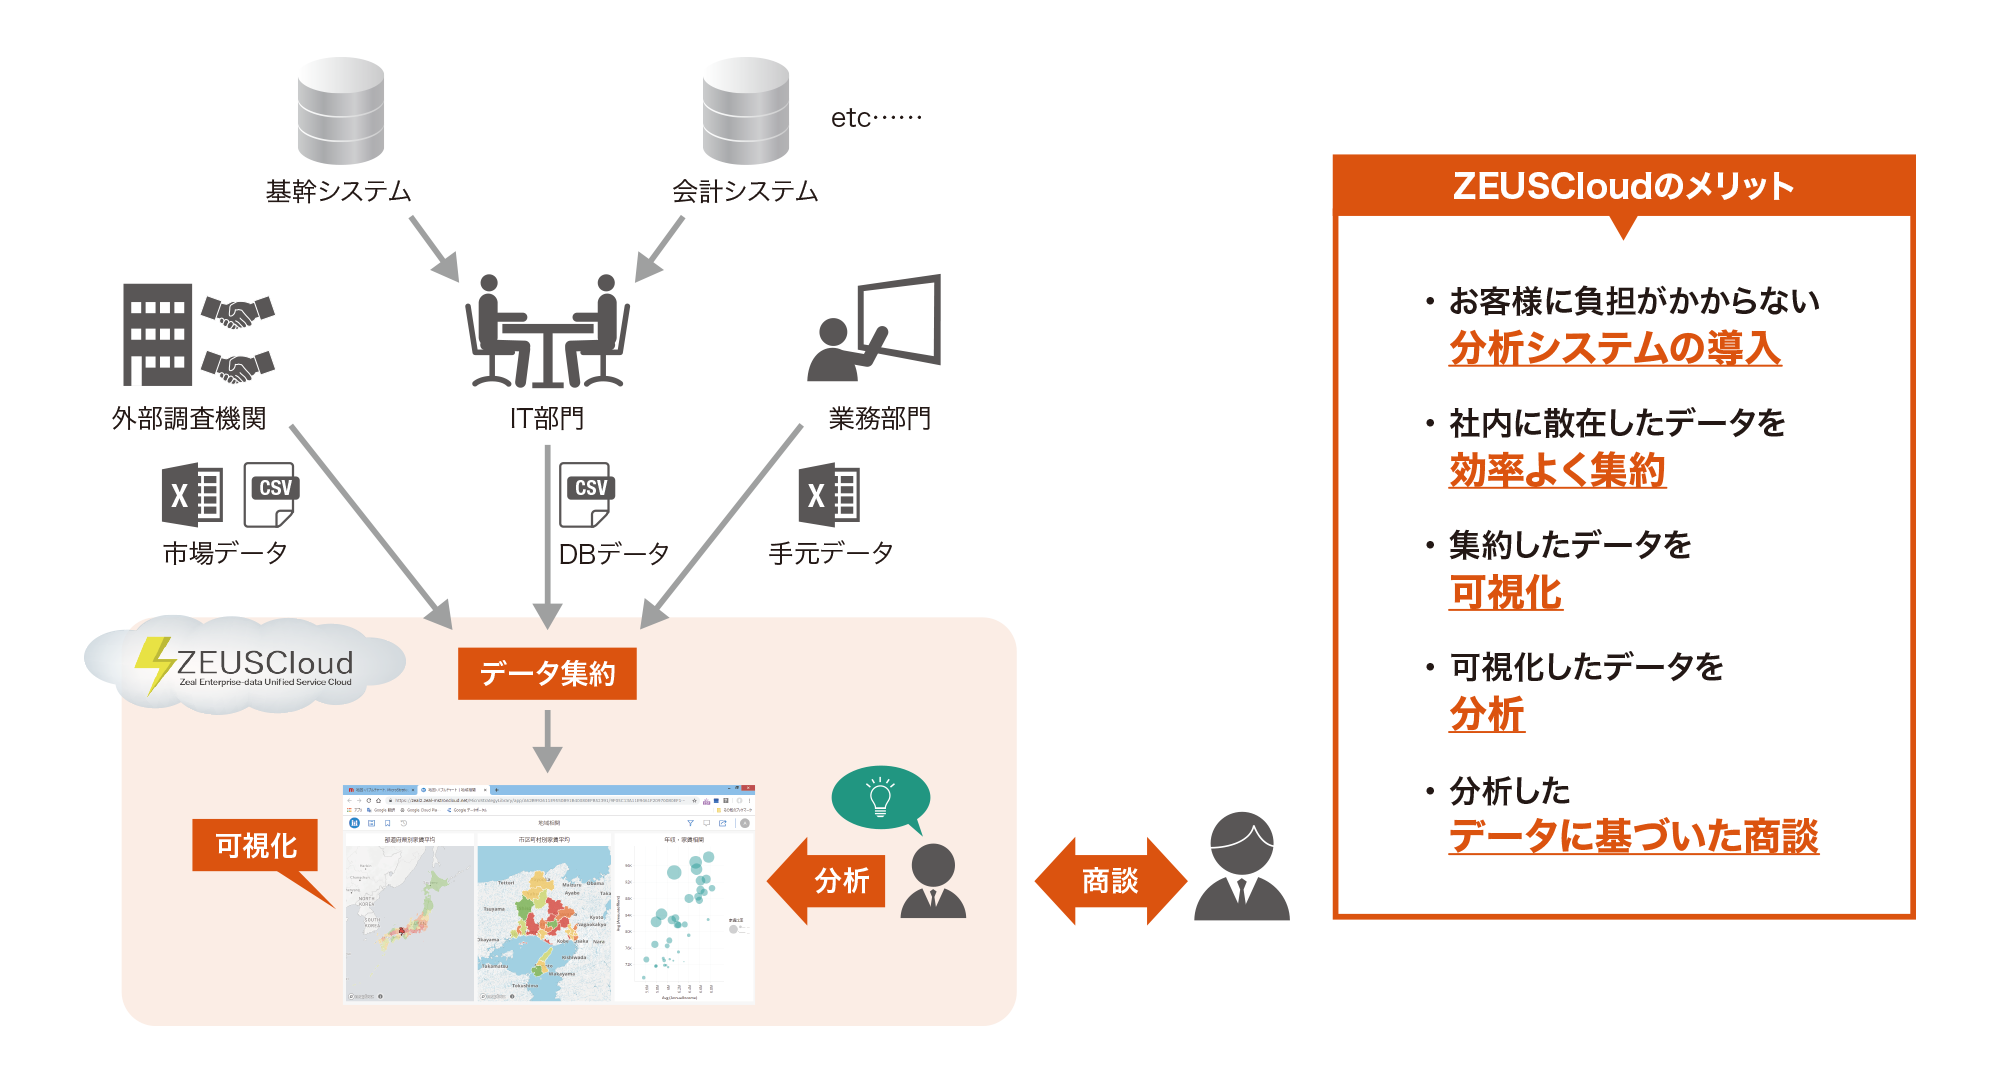 【DXツール導入事例】セロリー、営業力強化へデータ活用の高度化と効率化を目指し、ジールのクラウド型データ分析基盤 「ZEUSCloud」導入